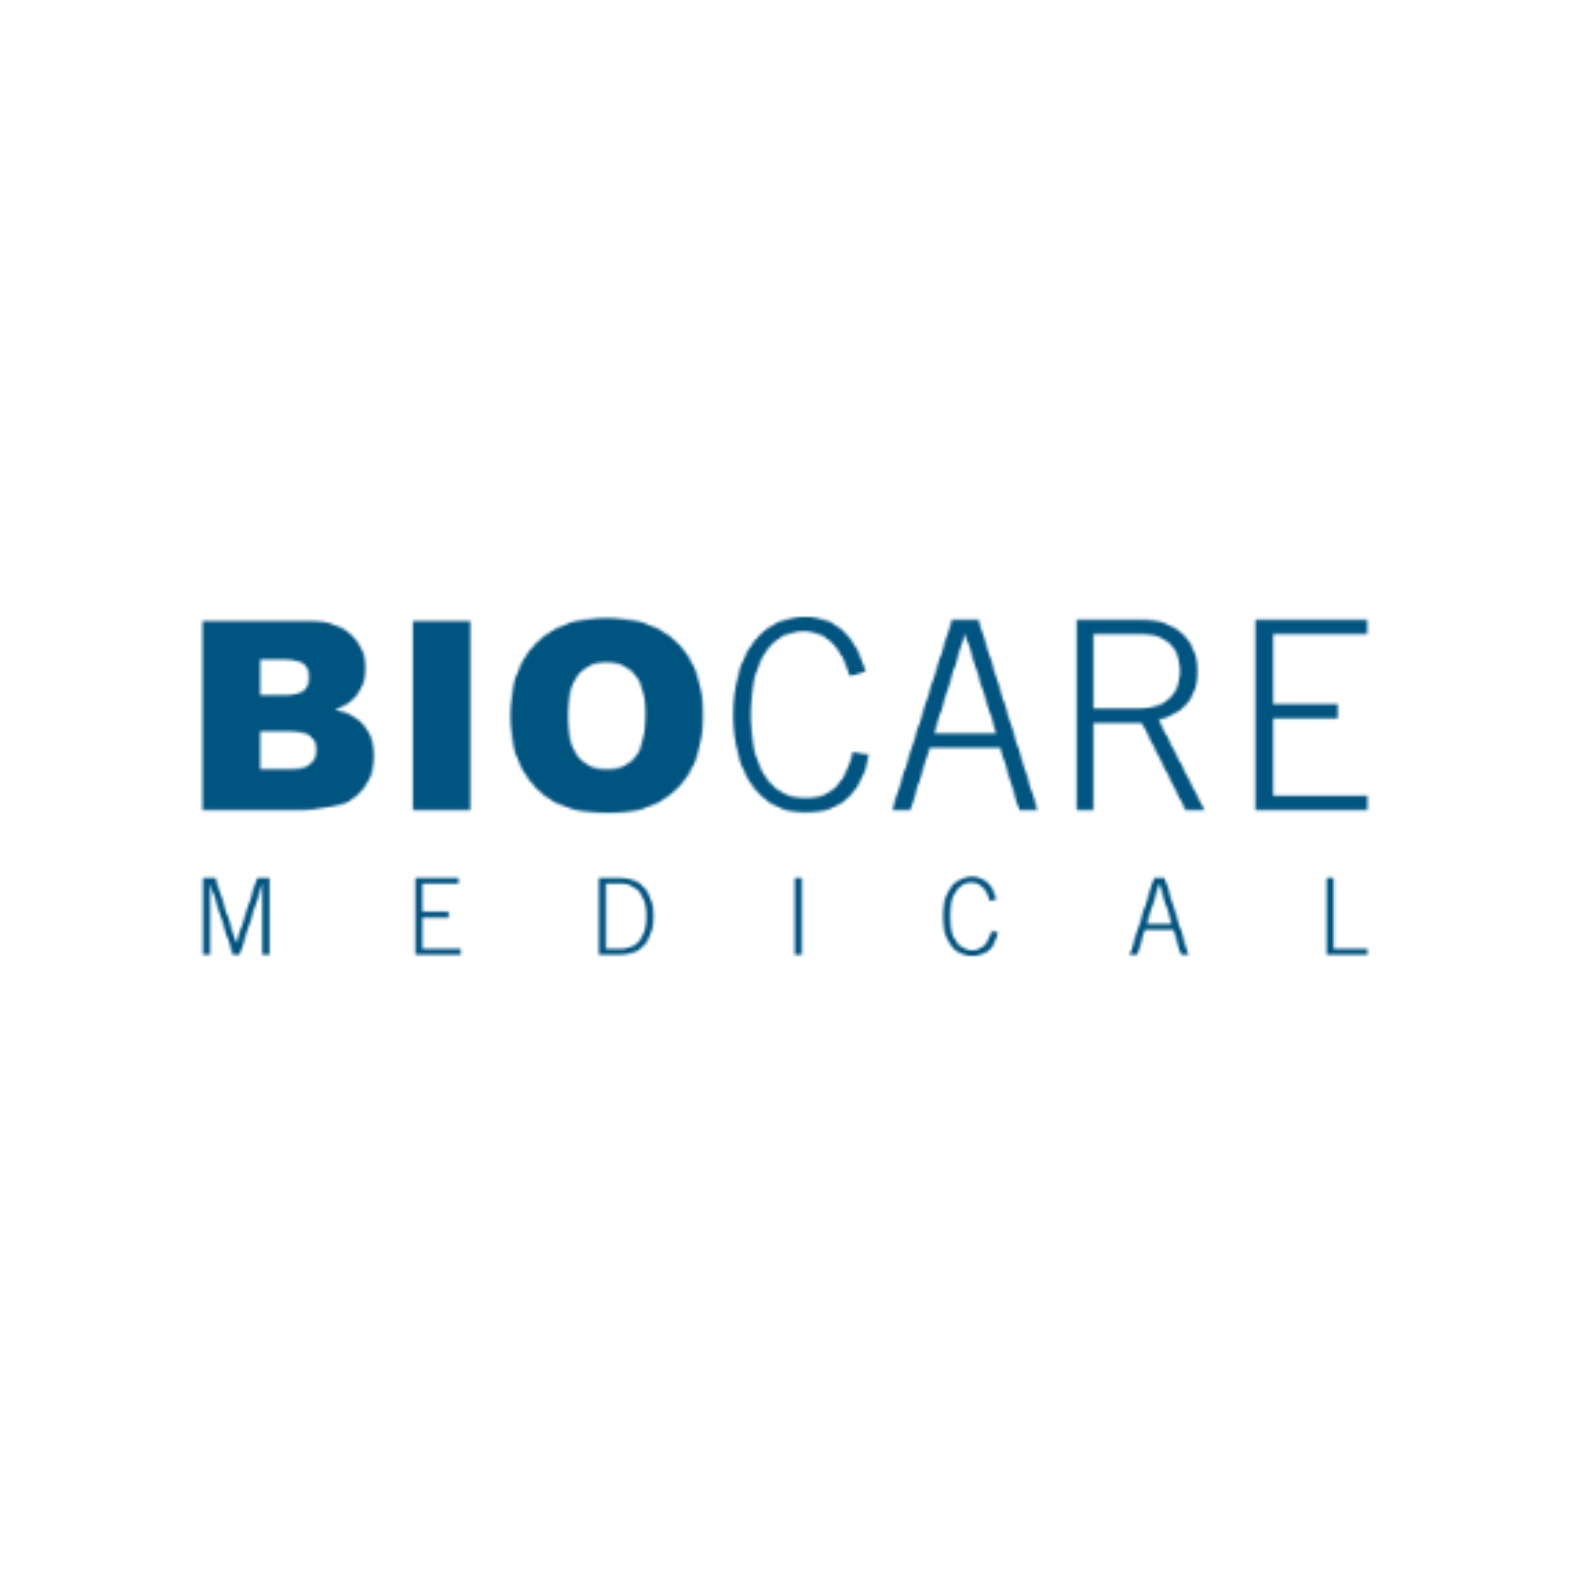 images/AFMS/Partners/BiocareMedical.jpg#joomlaImage://local-images/AFMS/Partners/BiocareMedical.jpg?width=1570&height=1570